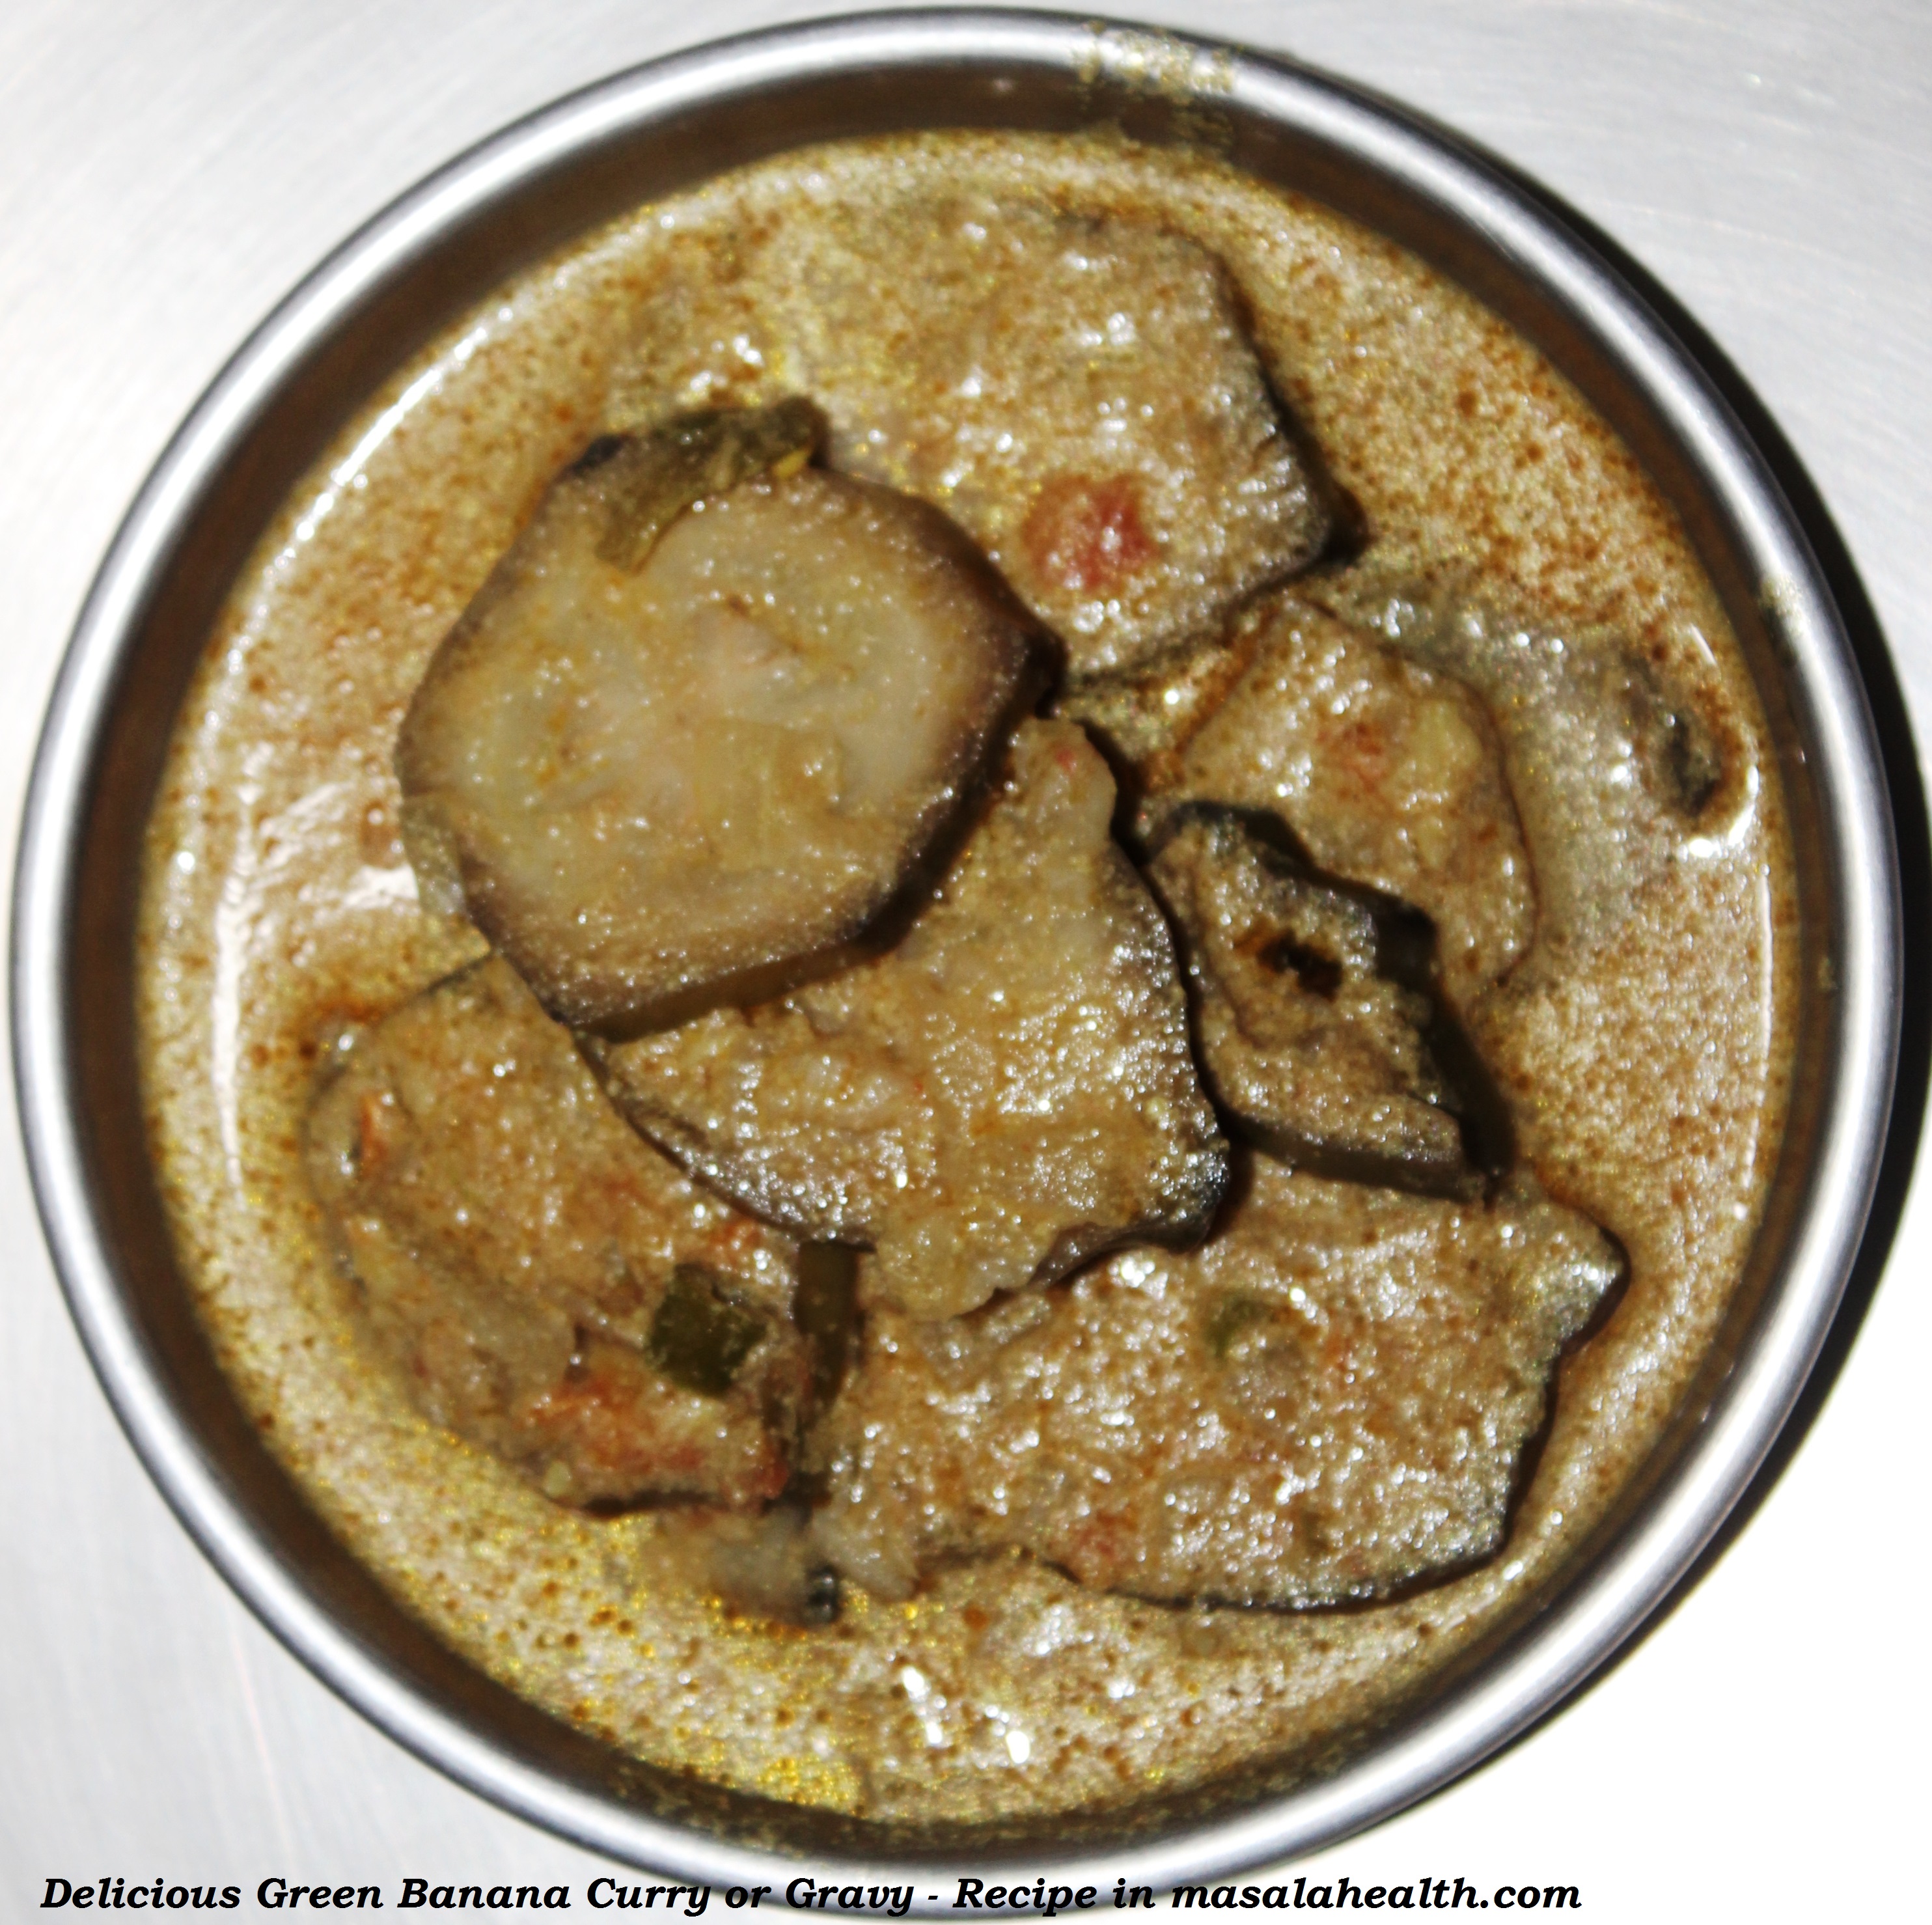 Vegetarian Recipe of Delicious Green Banana Curry/Gravy in masalahealth.in